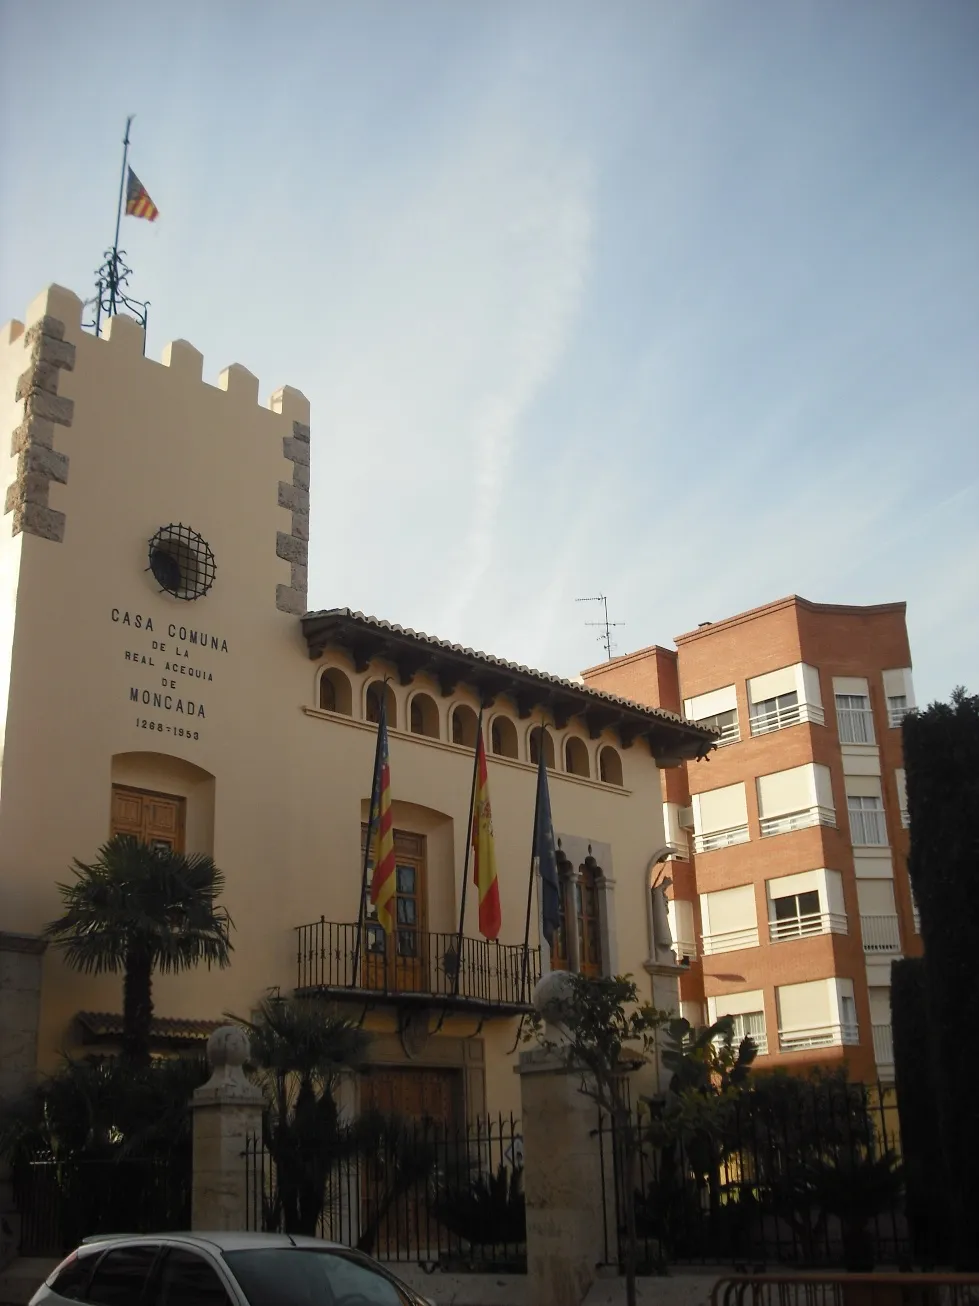 Photo showing: Casa comuna de la Real Acequia de Moncada.
.